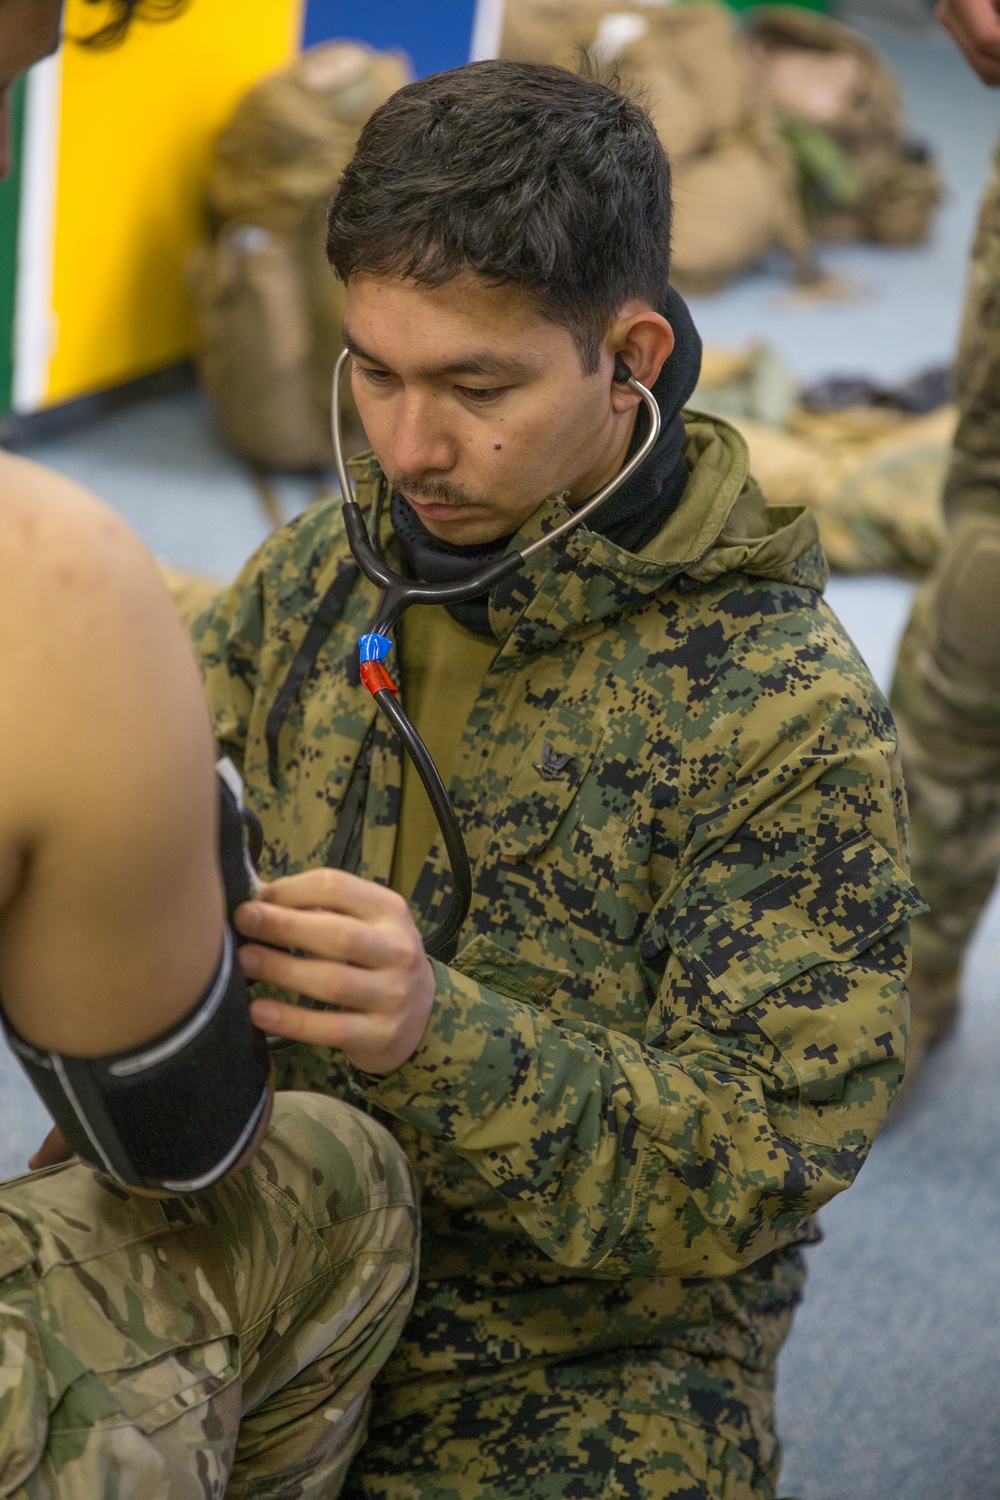 15th MEU Sailors, Air Force medical personnel train together at Cold Bay, Alaska during Northern Edge 2021